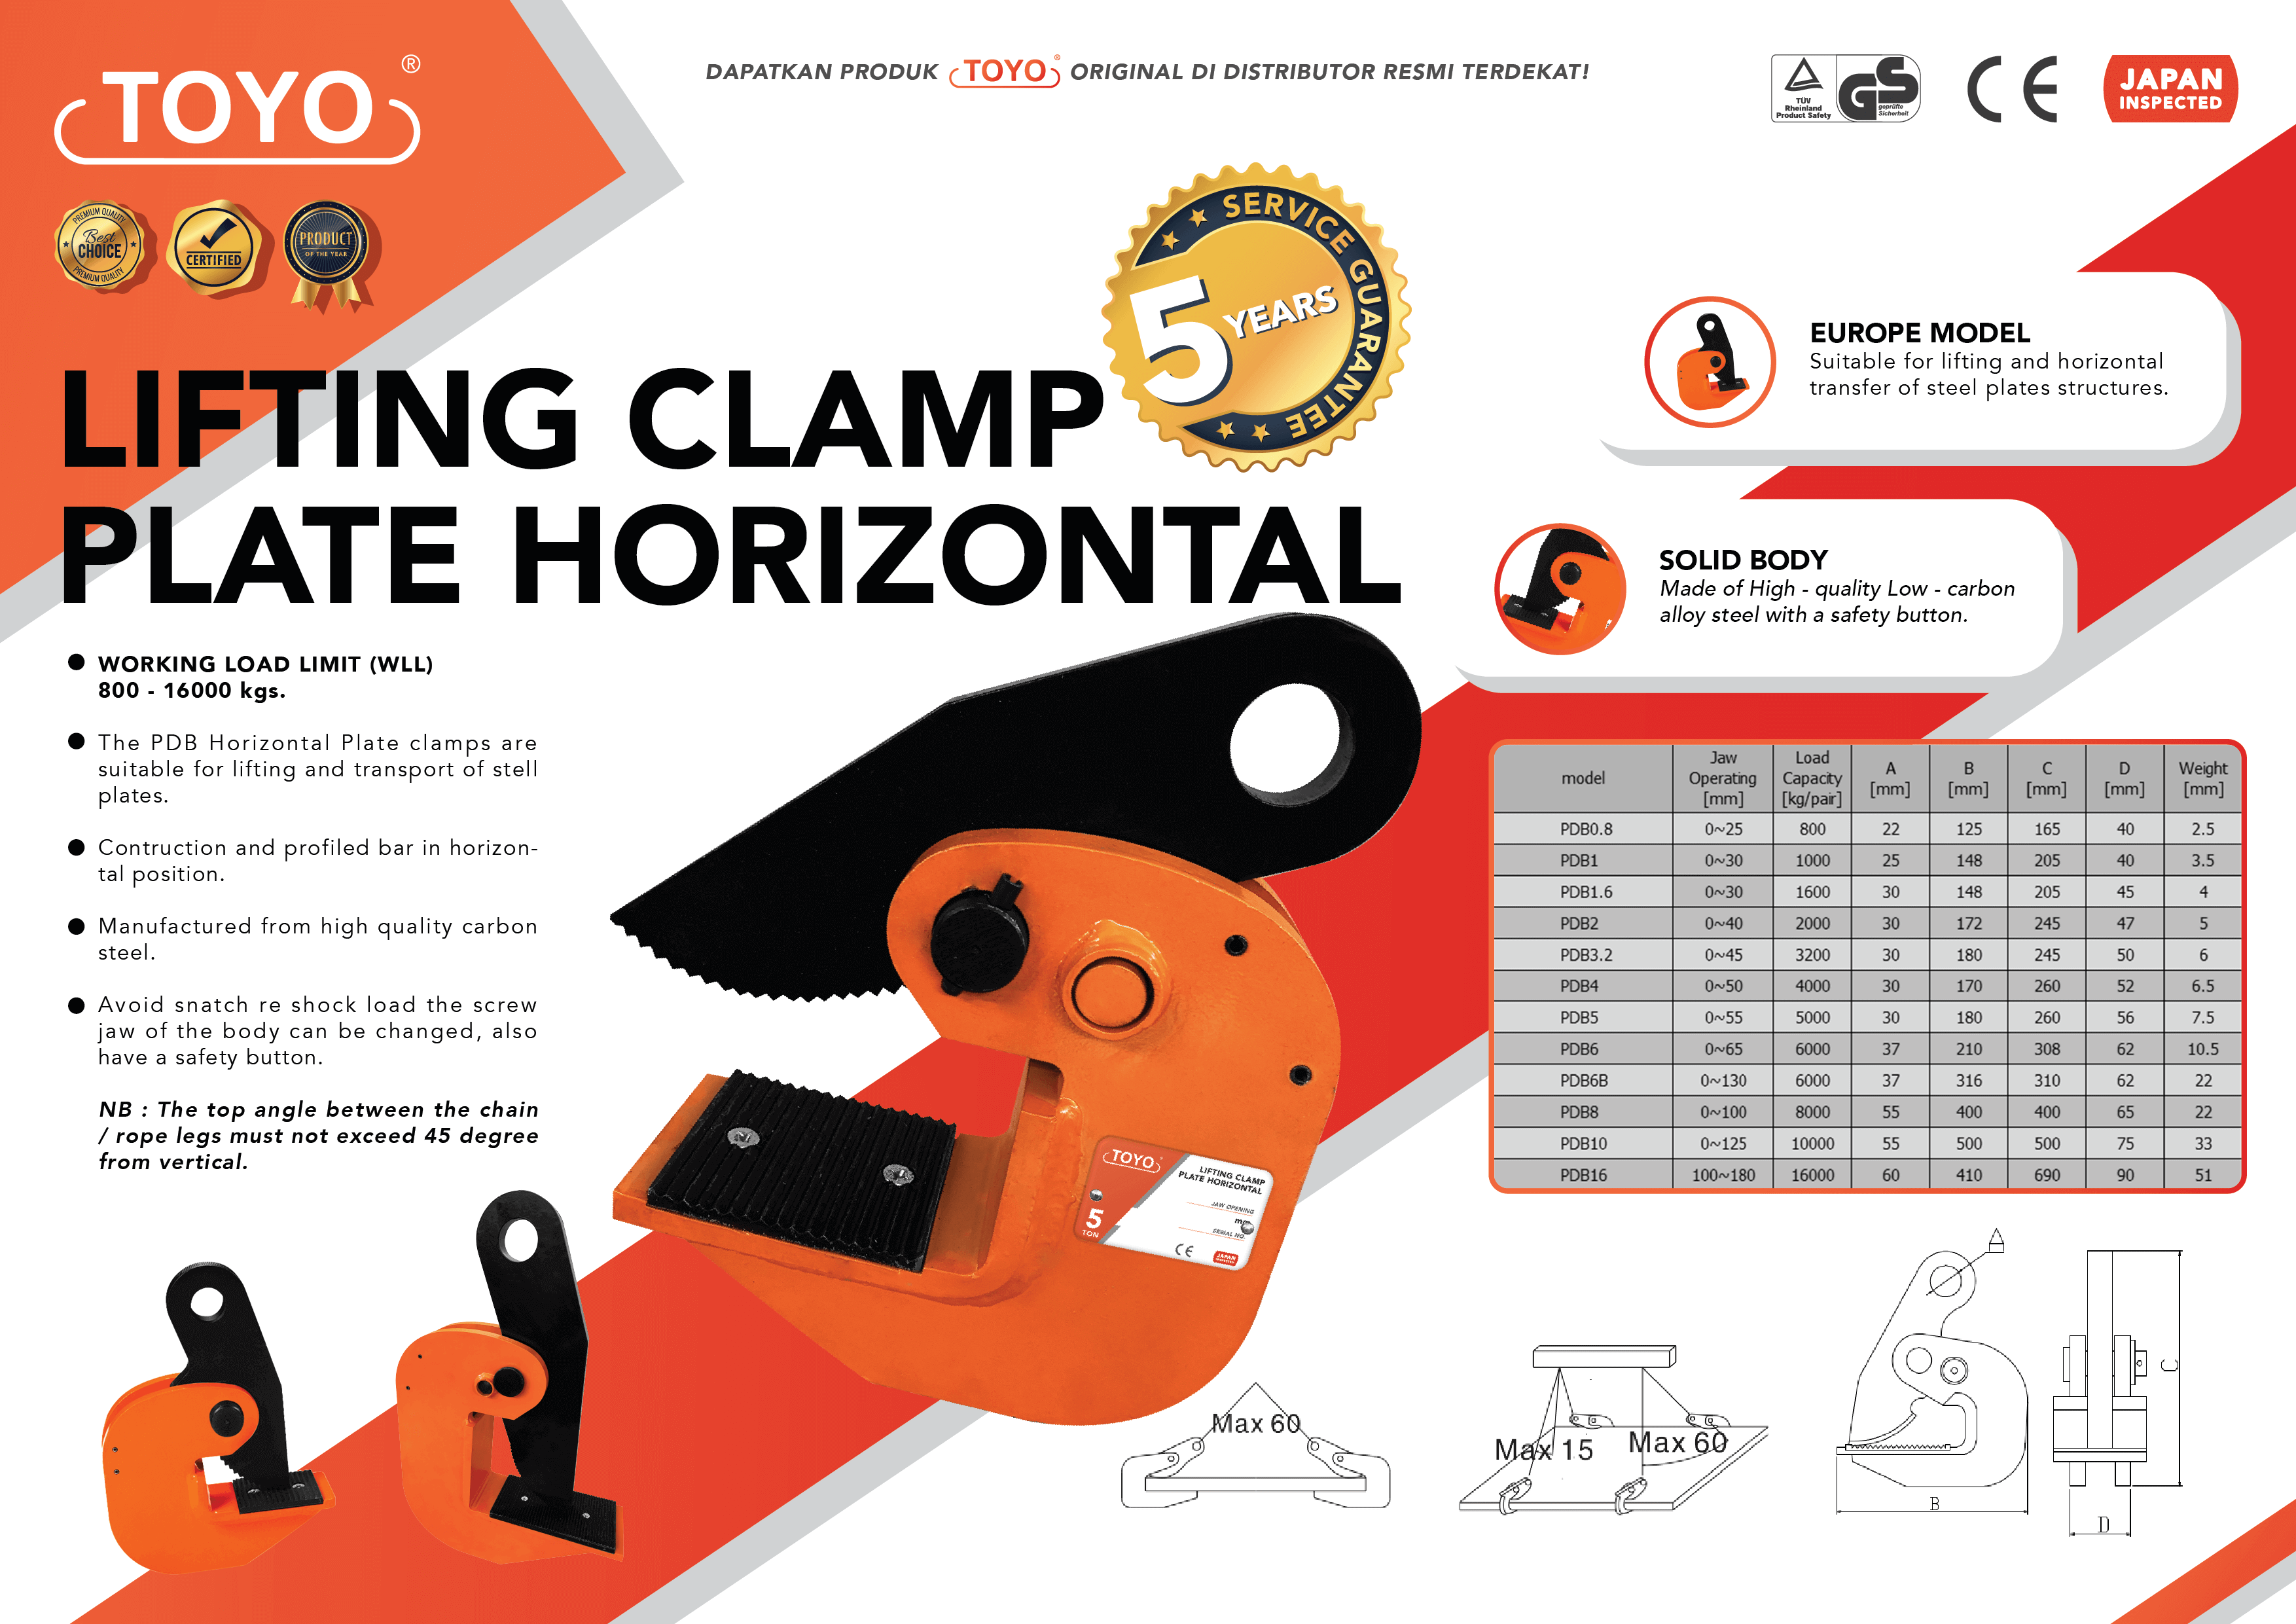 Spesifikasi Detail Lifting Clamp Plate Horizontal Toyo Original